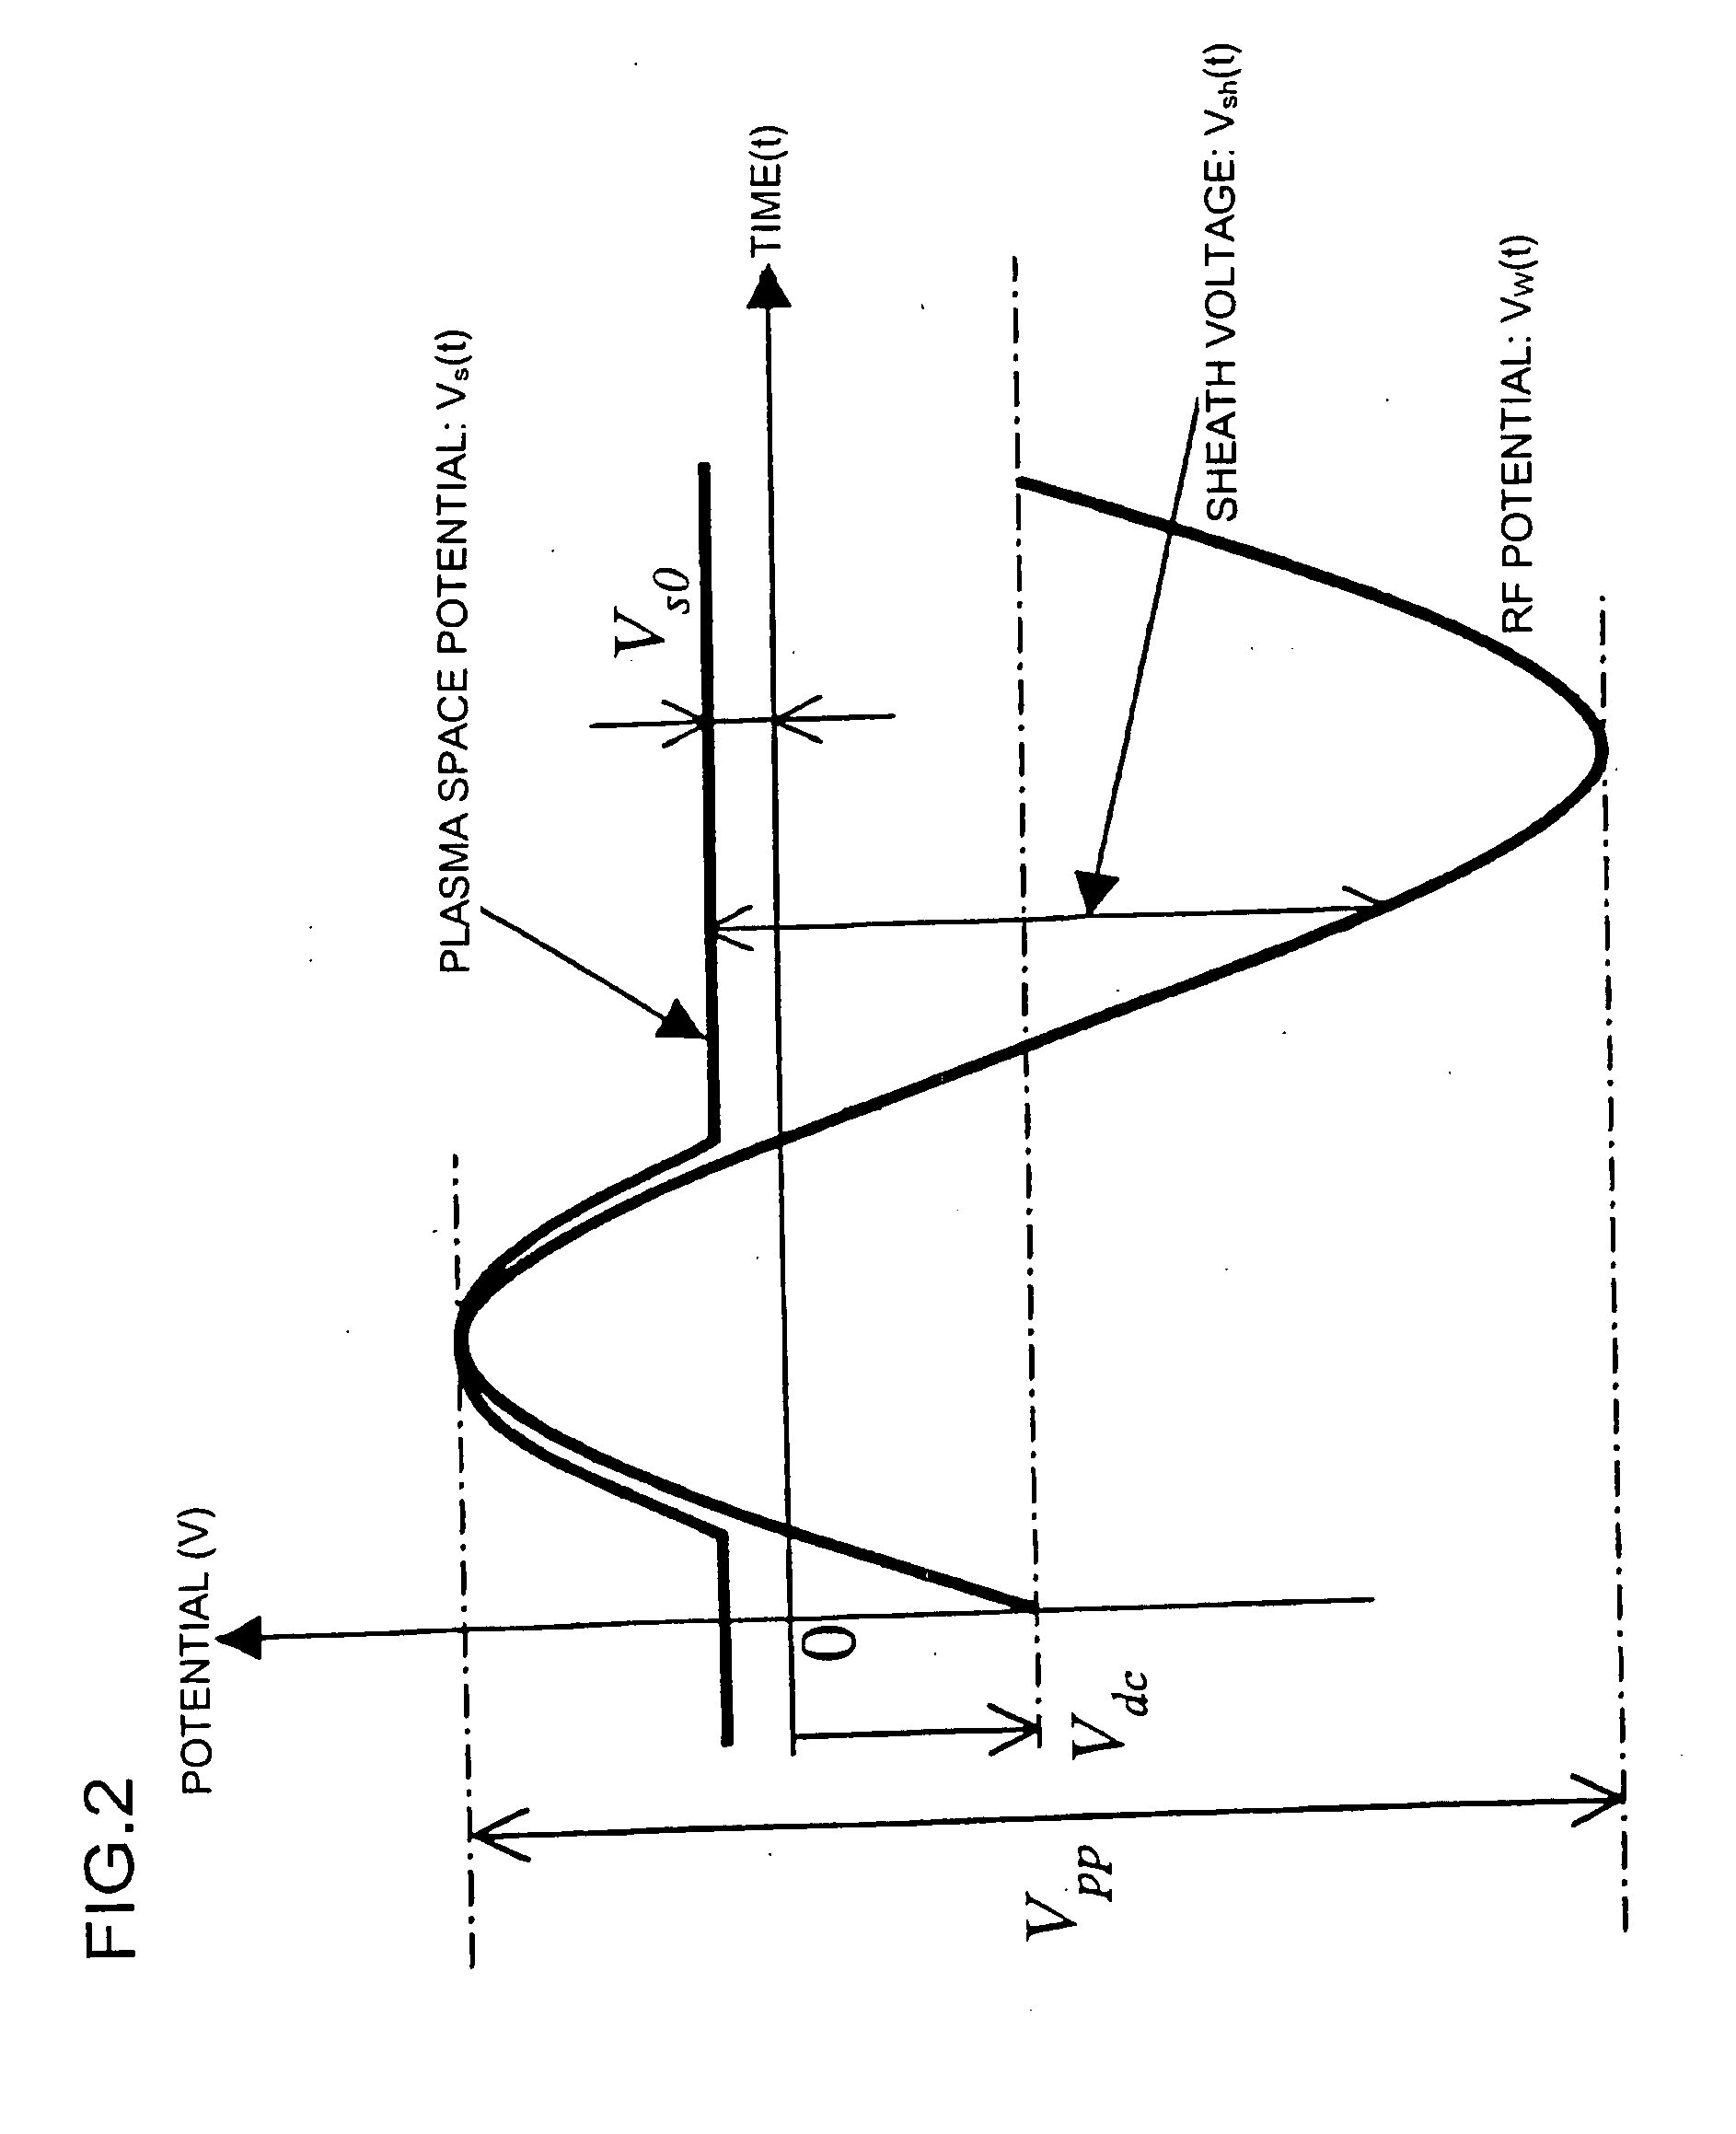 Method and apparatus for plasma processing